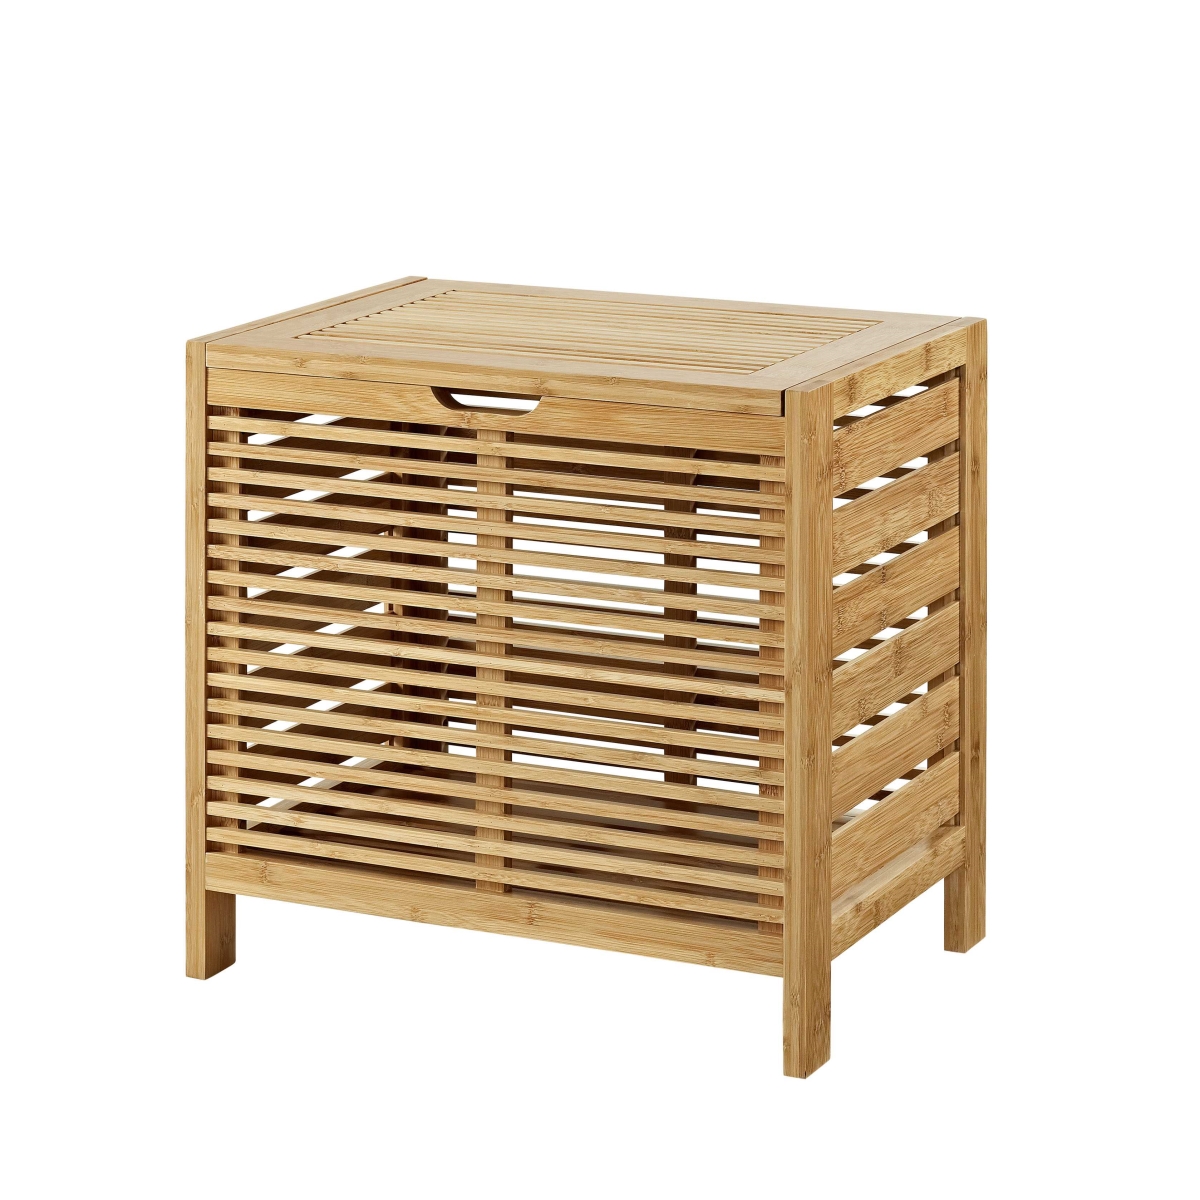 352170 Slated Design Bamboo Hamper With Spacious Storage & Hinge Lid, Brown